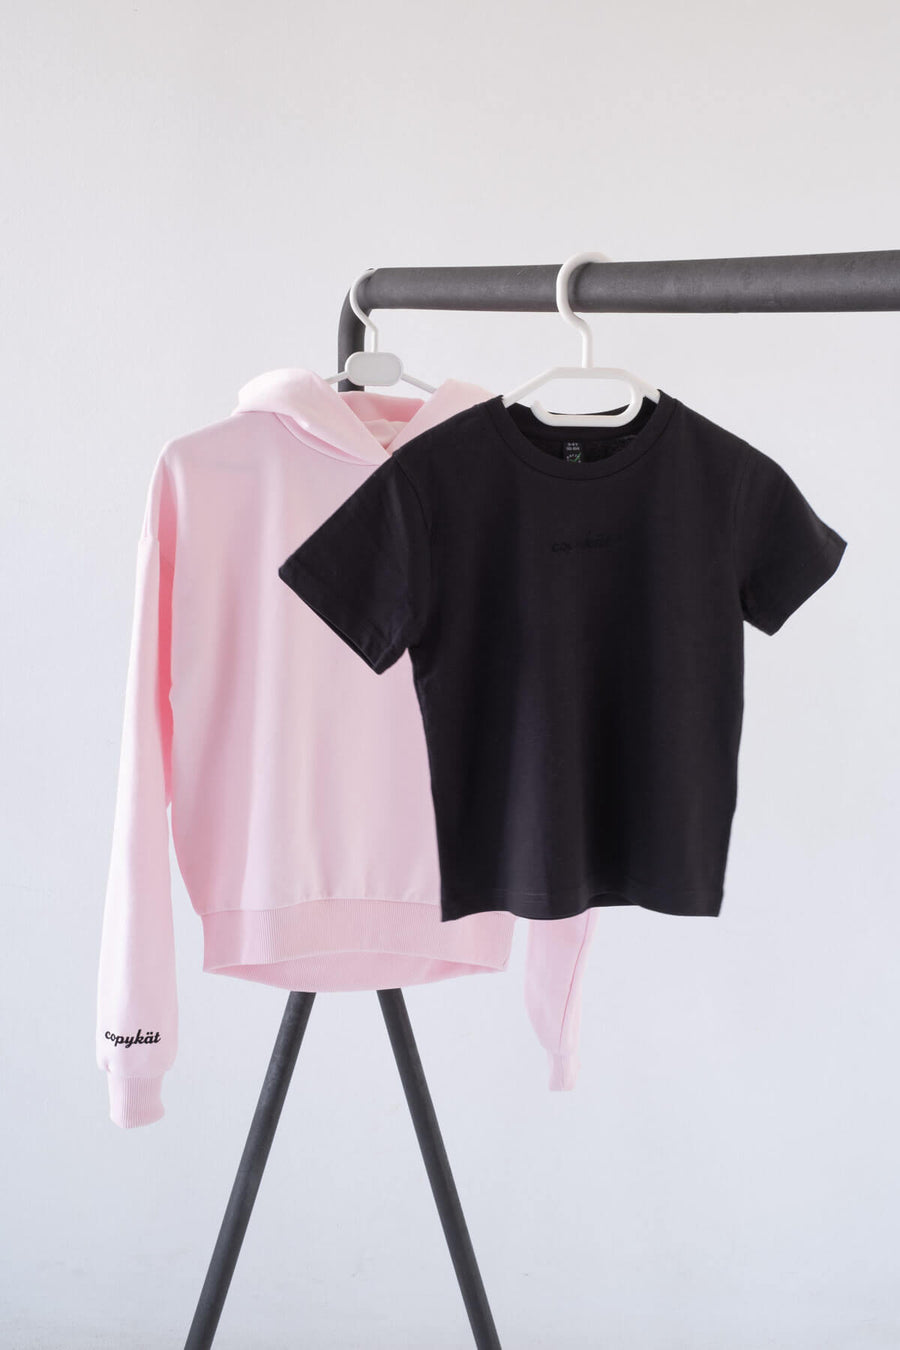 COPYKÄT Junior classic jersey t-shirt 3-4 YRS - Black and pink hoodie